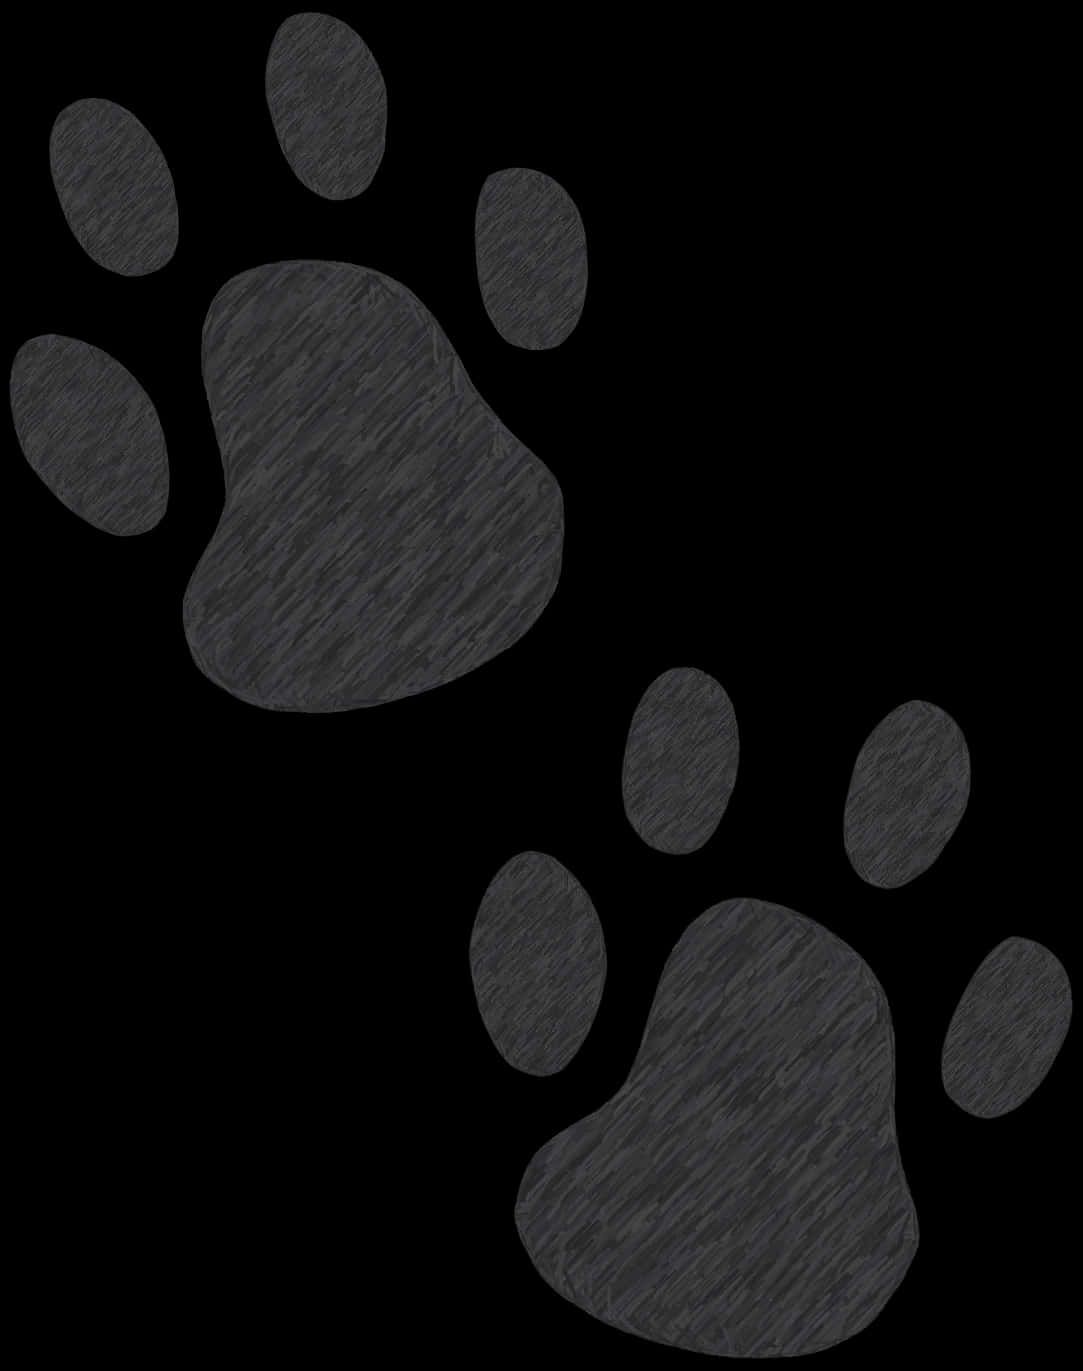 Textured Dog Paw Printson Black Background PNG